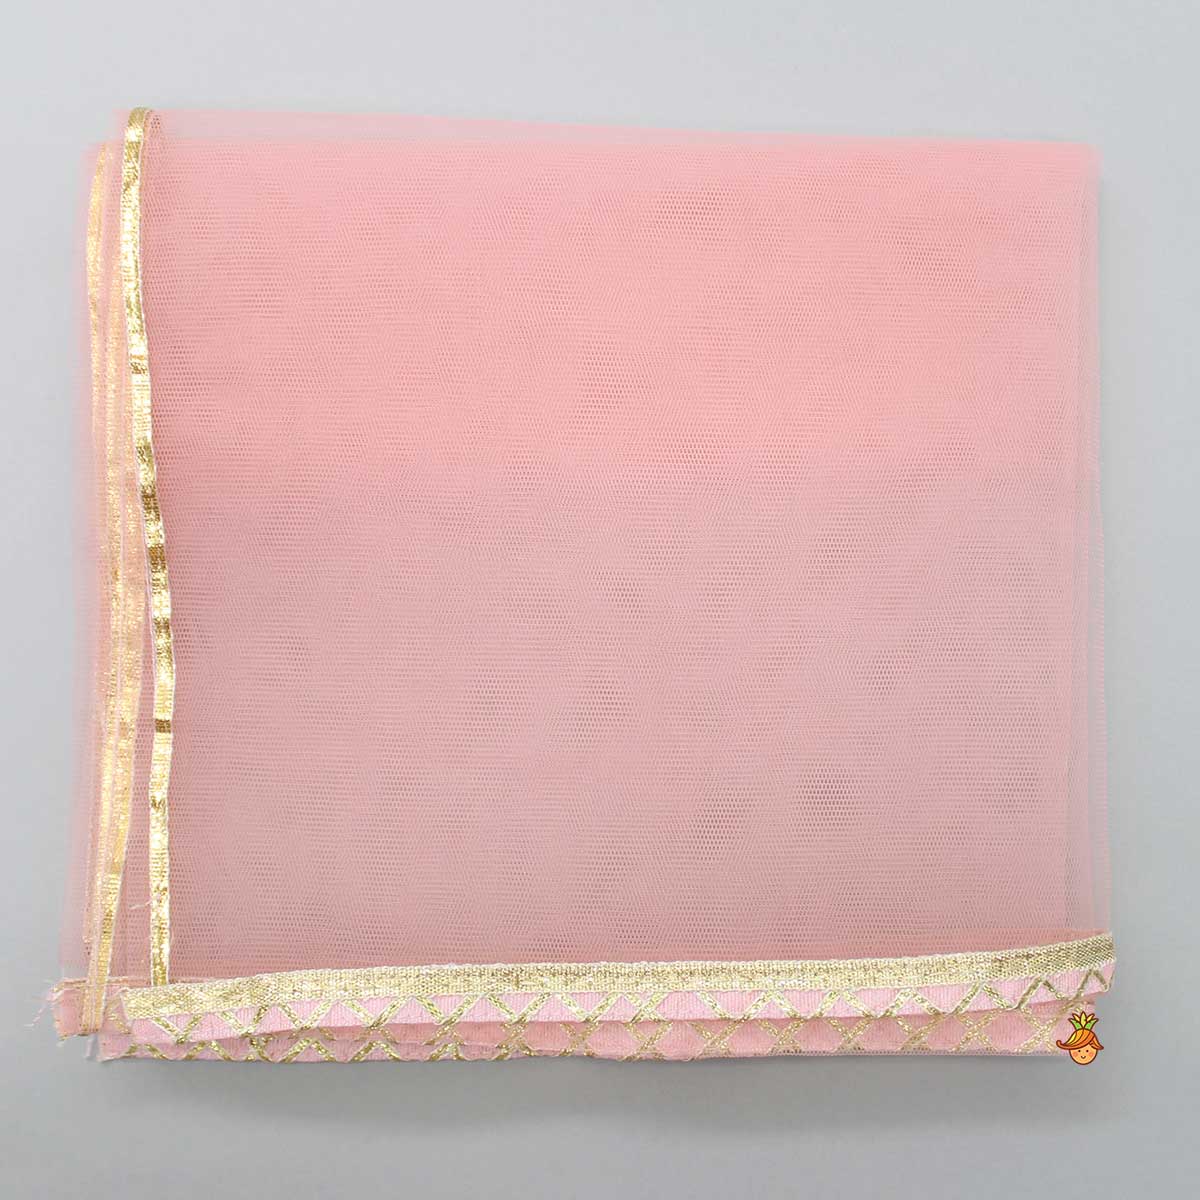 Floral Printed Angarkha Cotton Top And Sharara With Matching Pink Net Dupatta